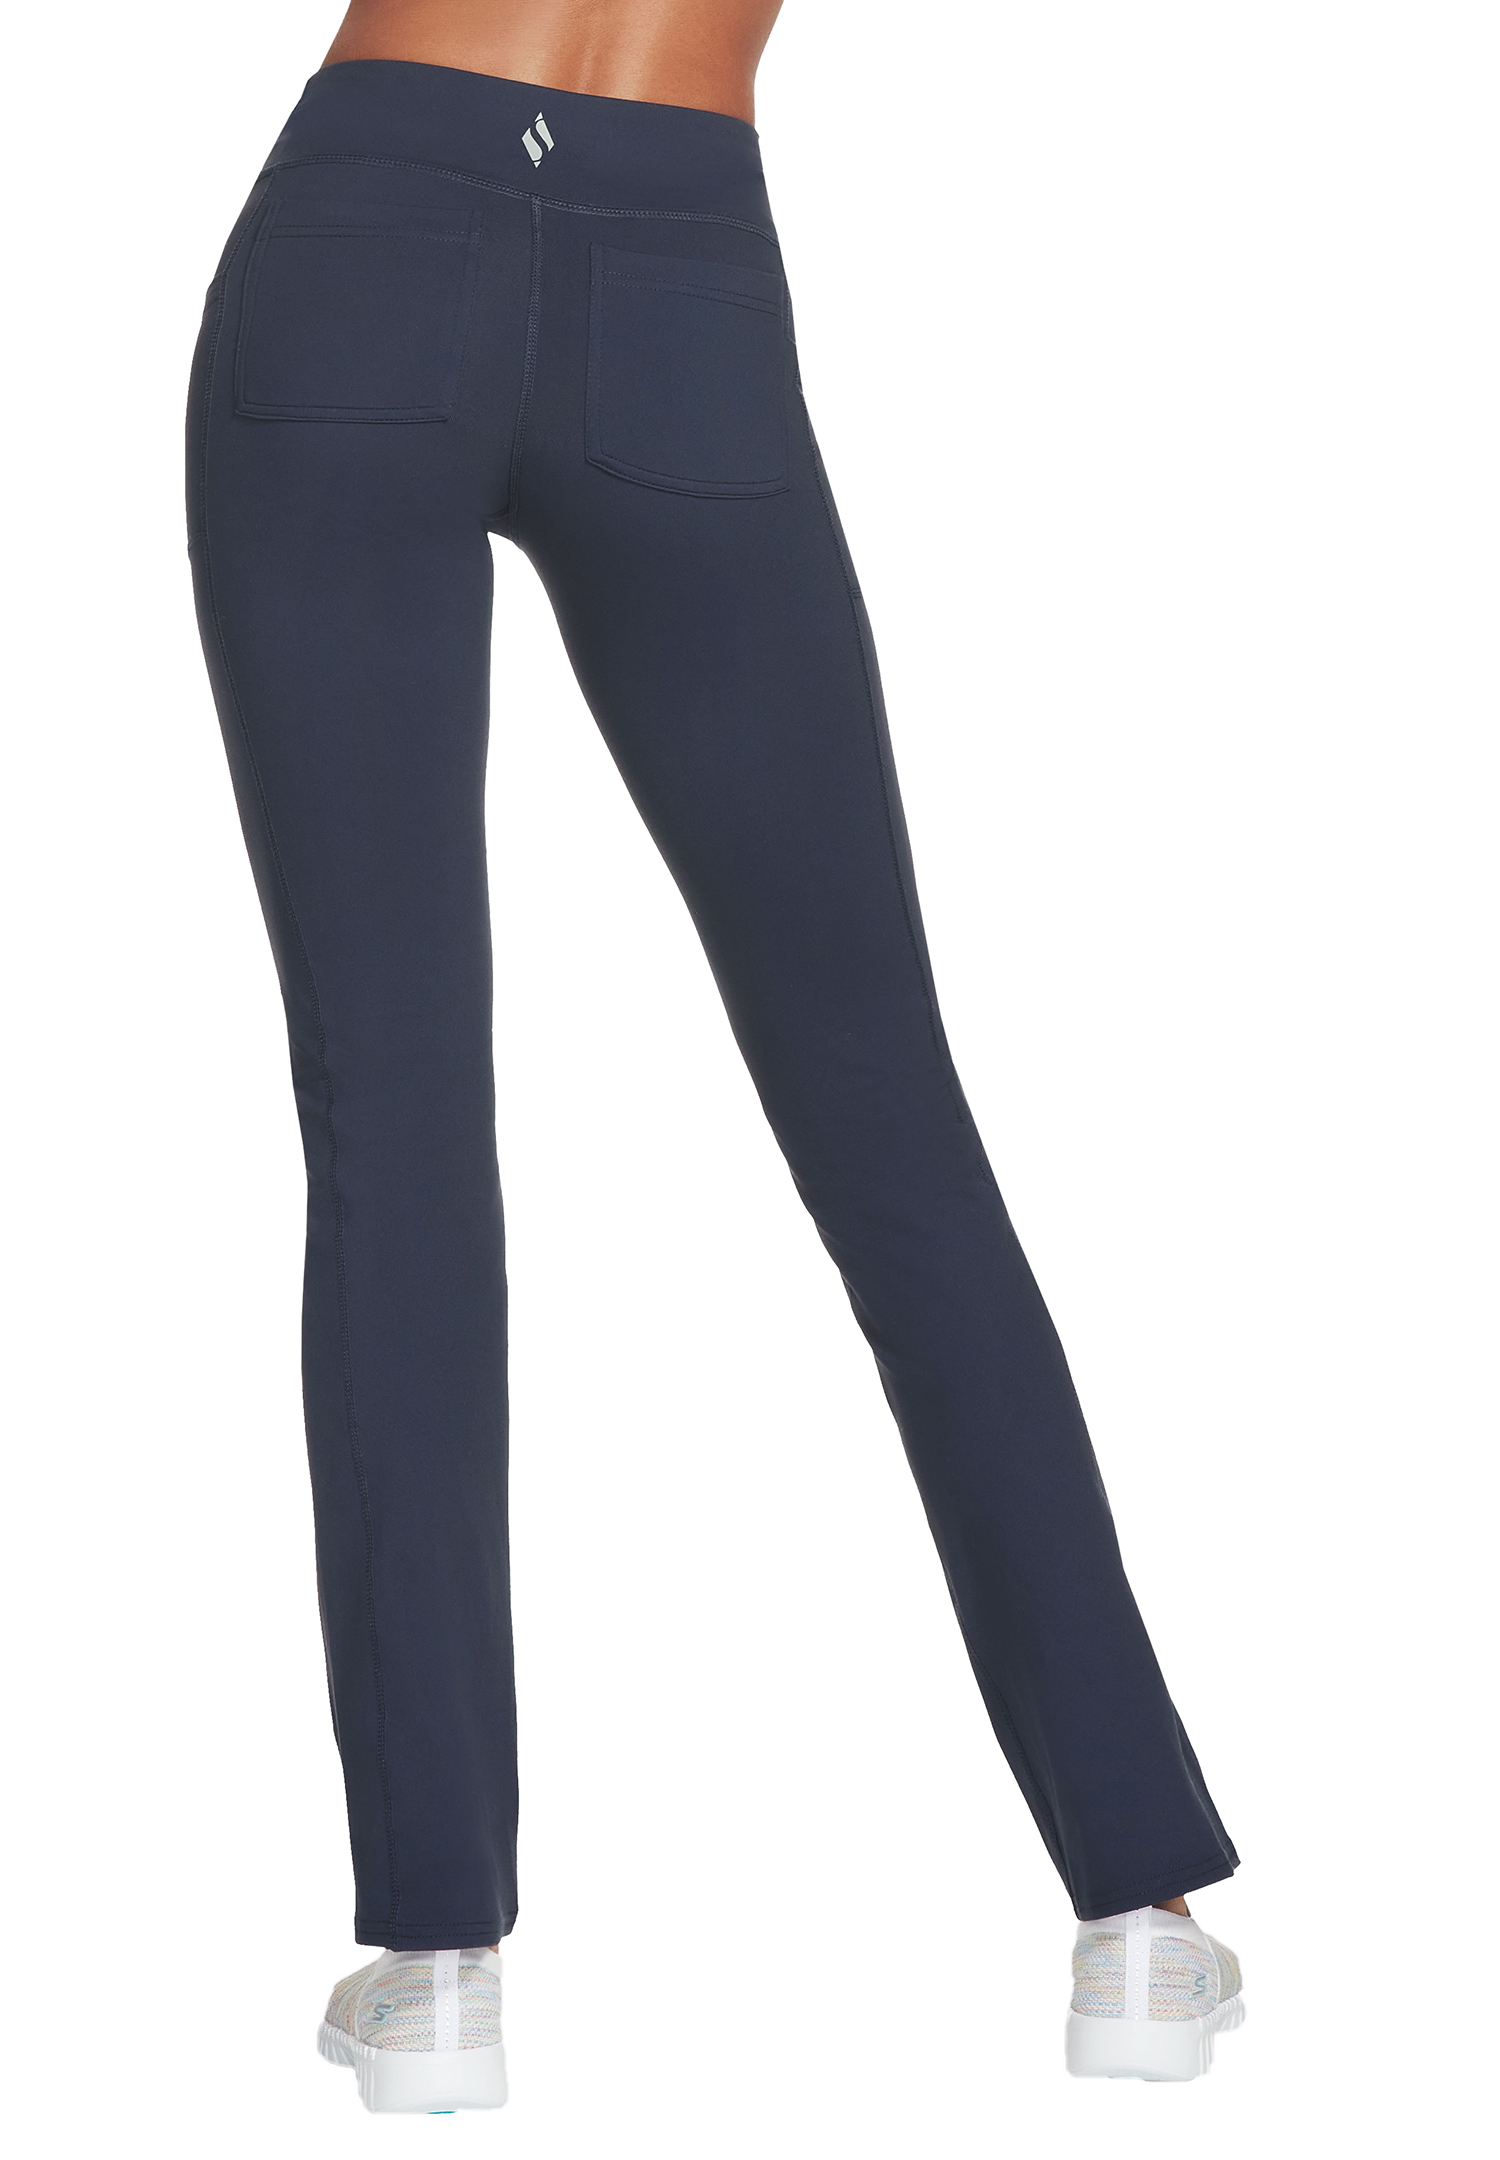 Skechers Apparel GO WALK OG Pant Regular Length Damen Sweatpants W03PT20B 417 NVY blau